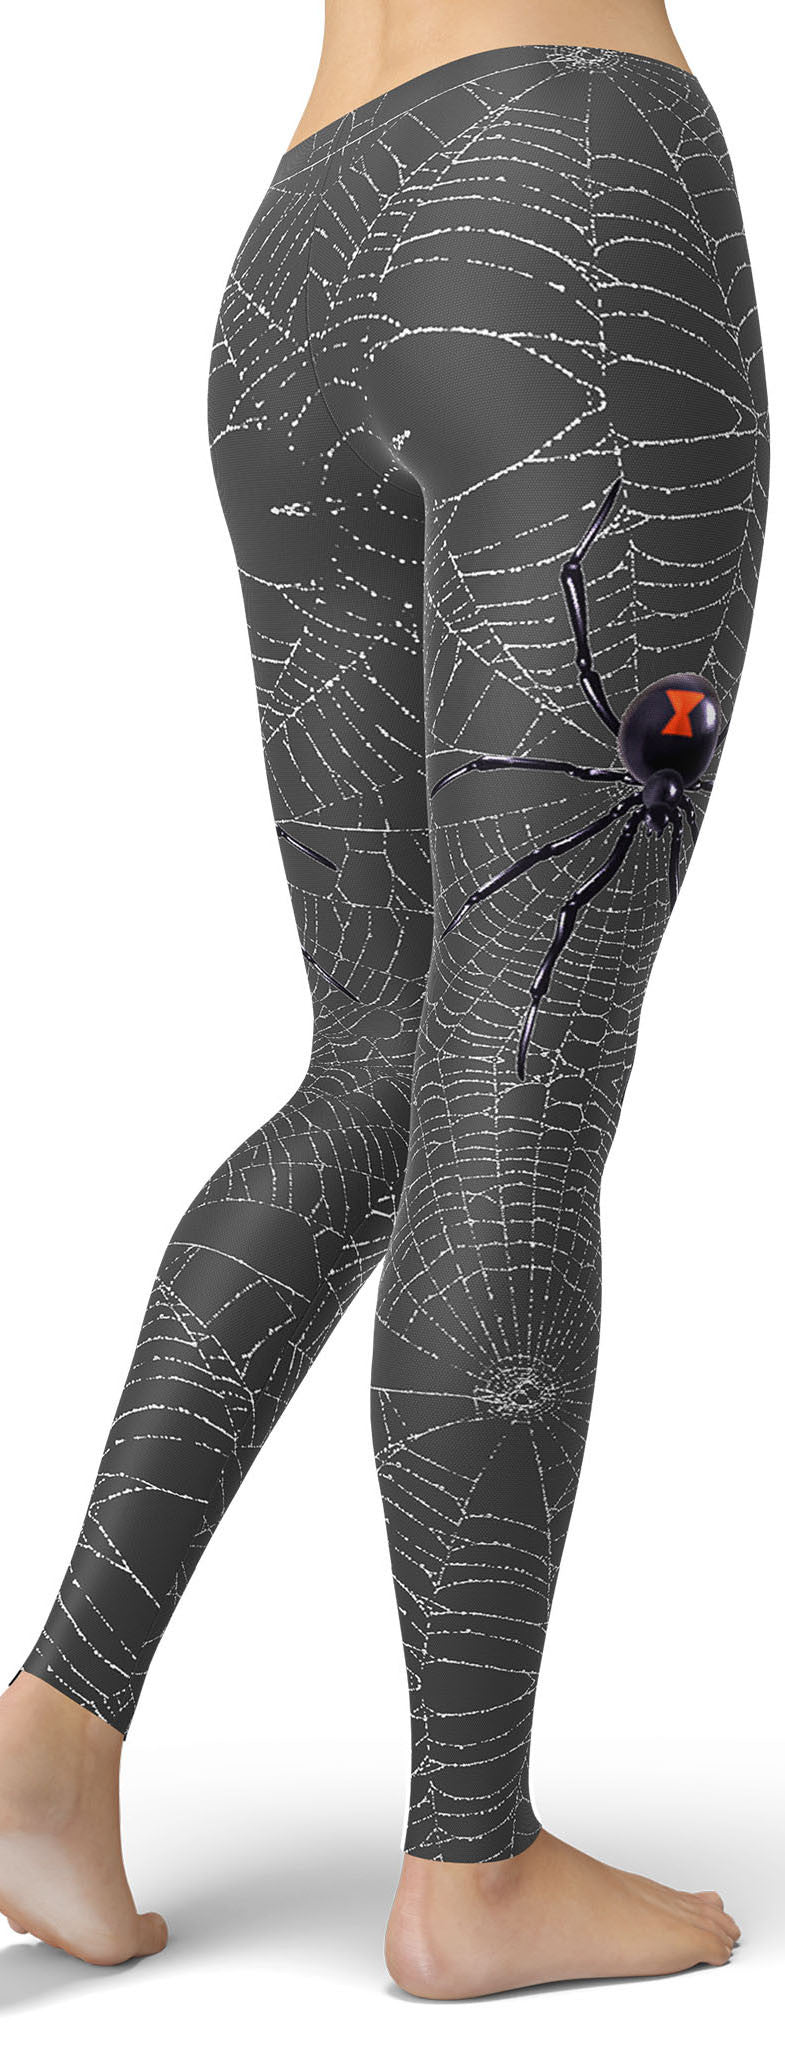 Spider Web Tights